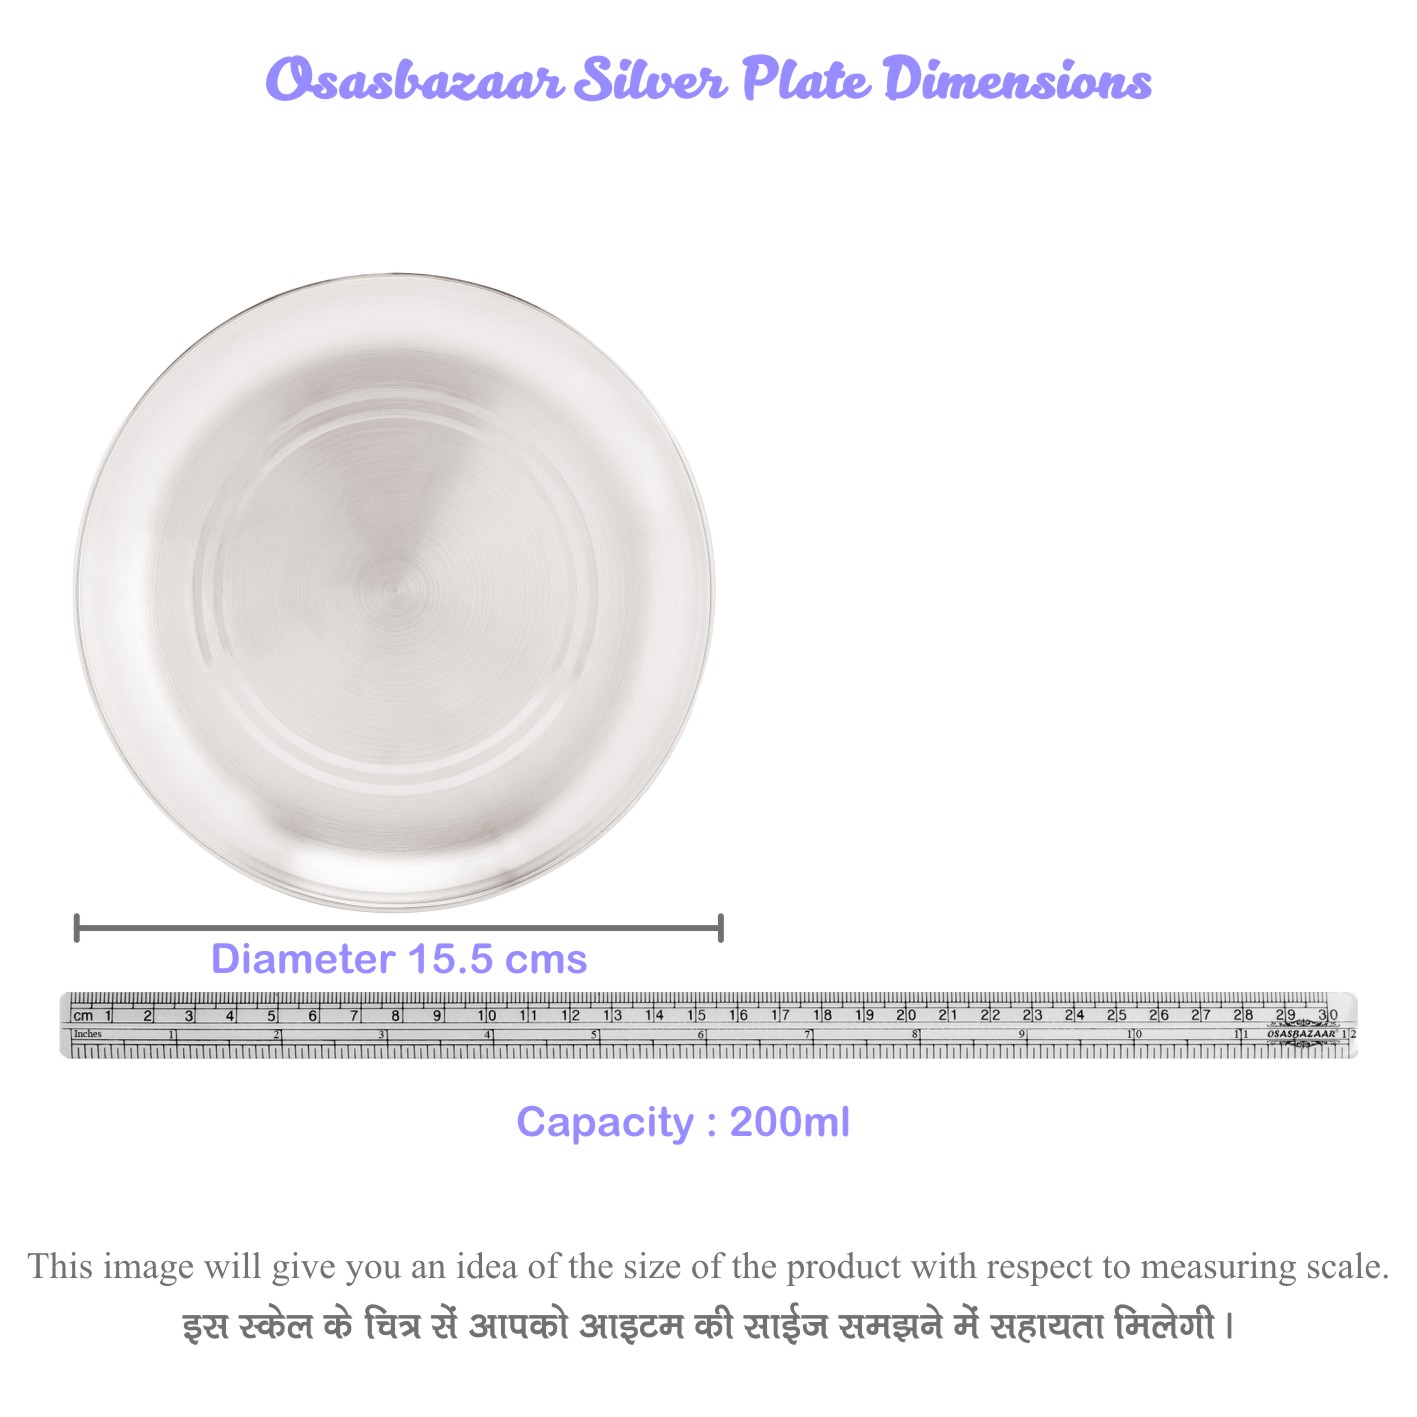 Pure Silver Plate - Osasbazaar